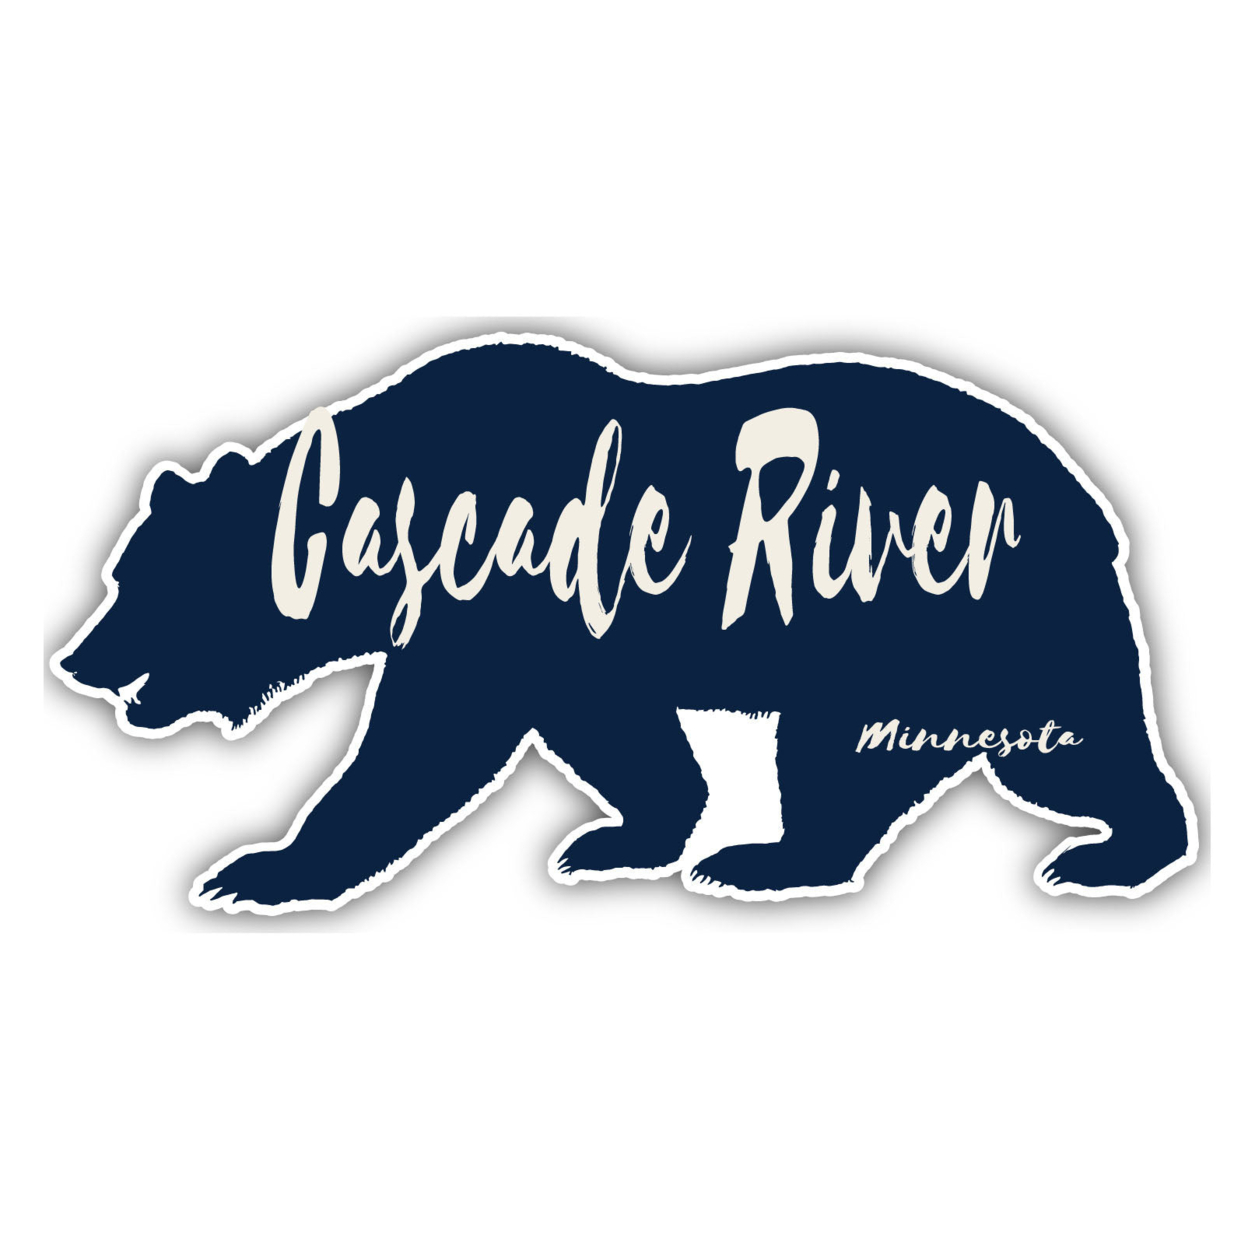 Cascade River Minnesota Souvenir Decorative Stickers (Choose Theme And Size) - Single Unit, 8-Inch, Bear